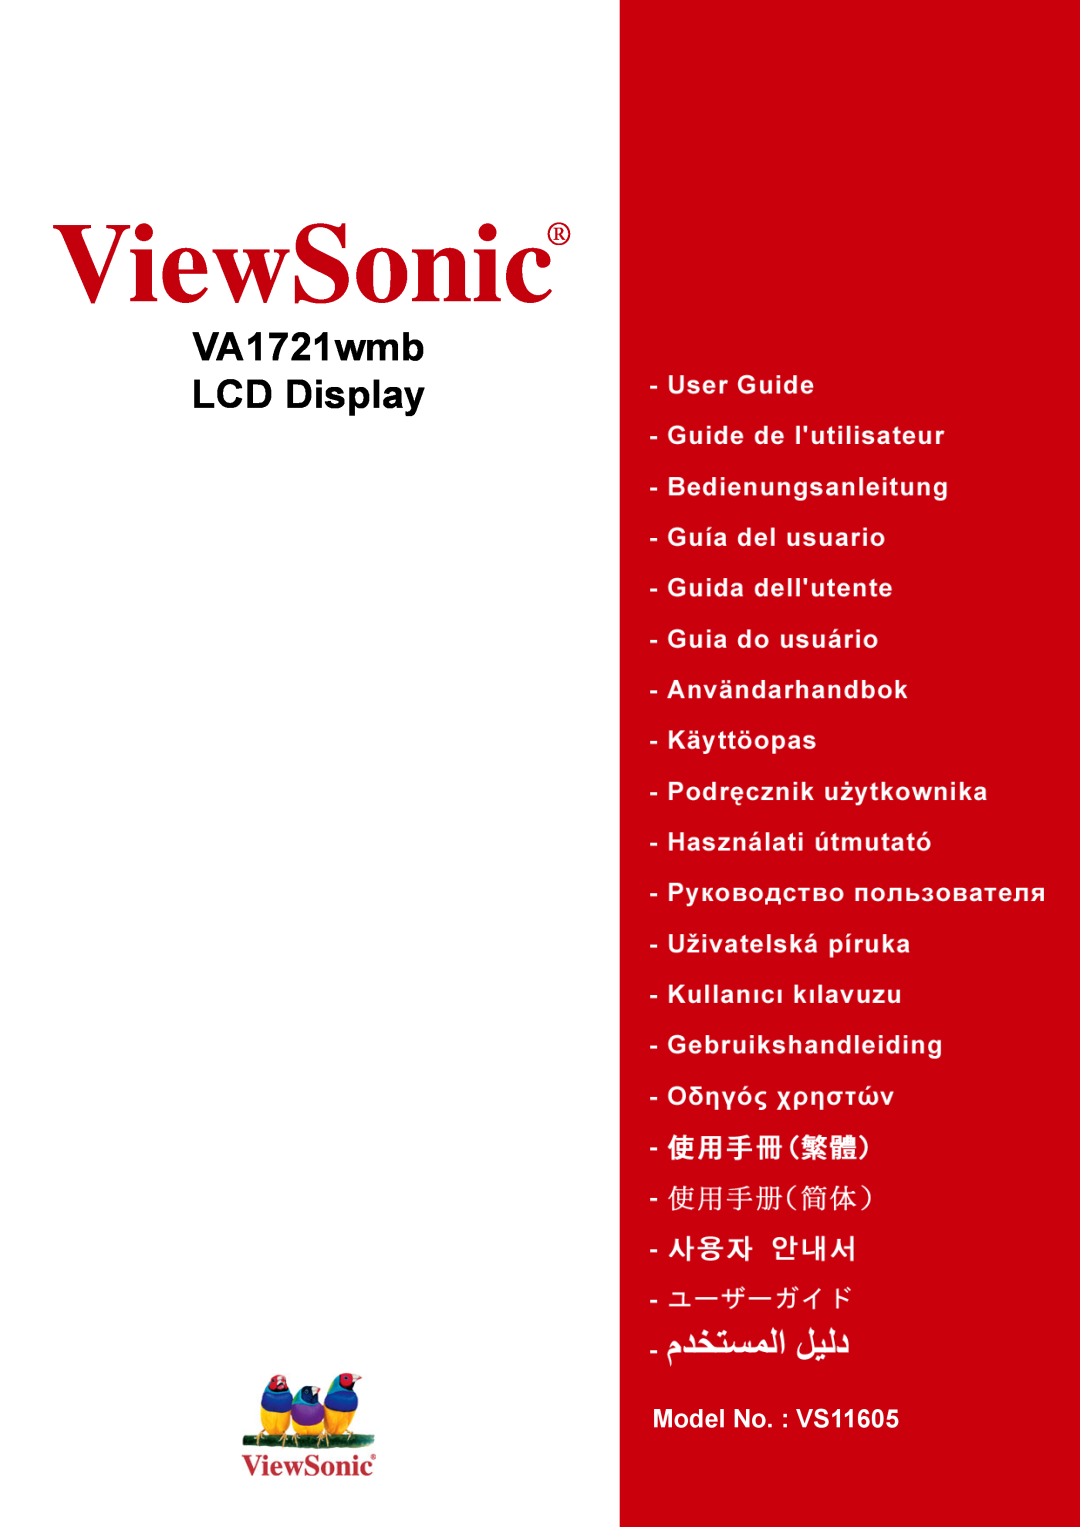 ViewSonic manual ViewSonic, VA1721wmb LCD Display, Model No. VS11605 